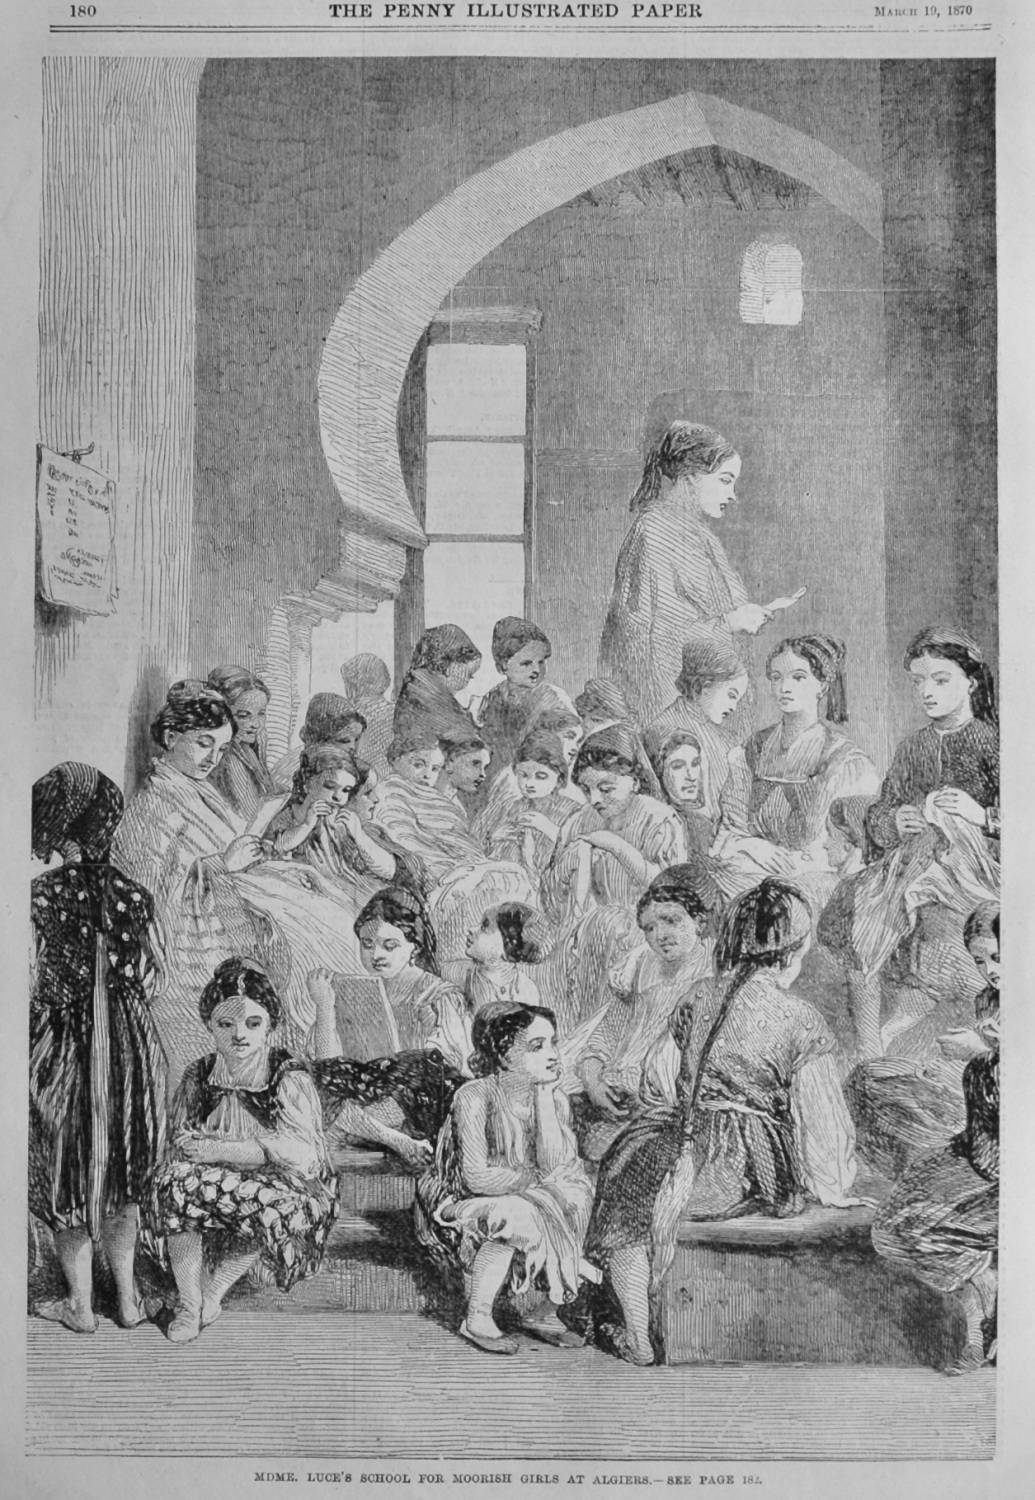 Mdme. Luce's School for Moorish Girls at Algiers.  1870.